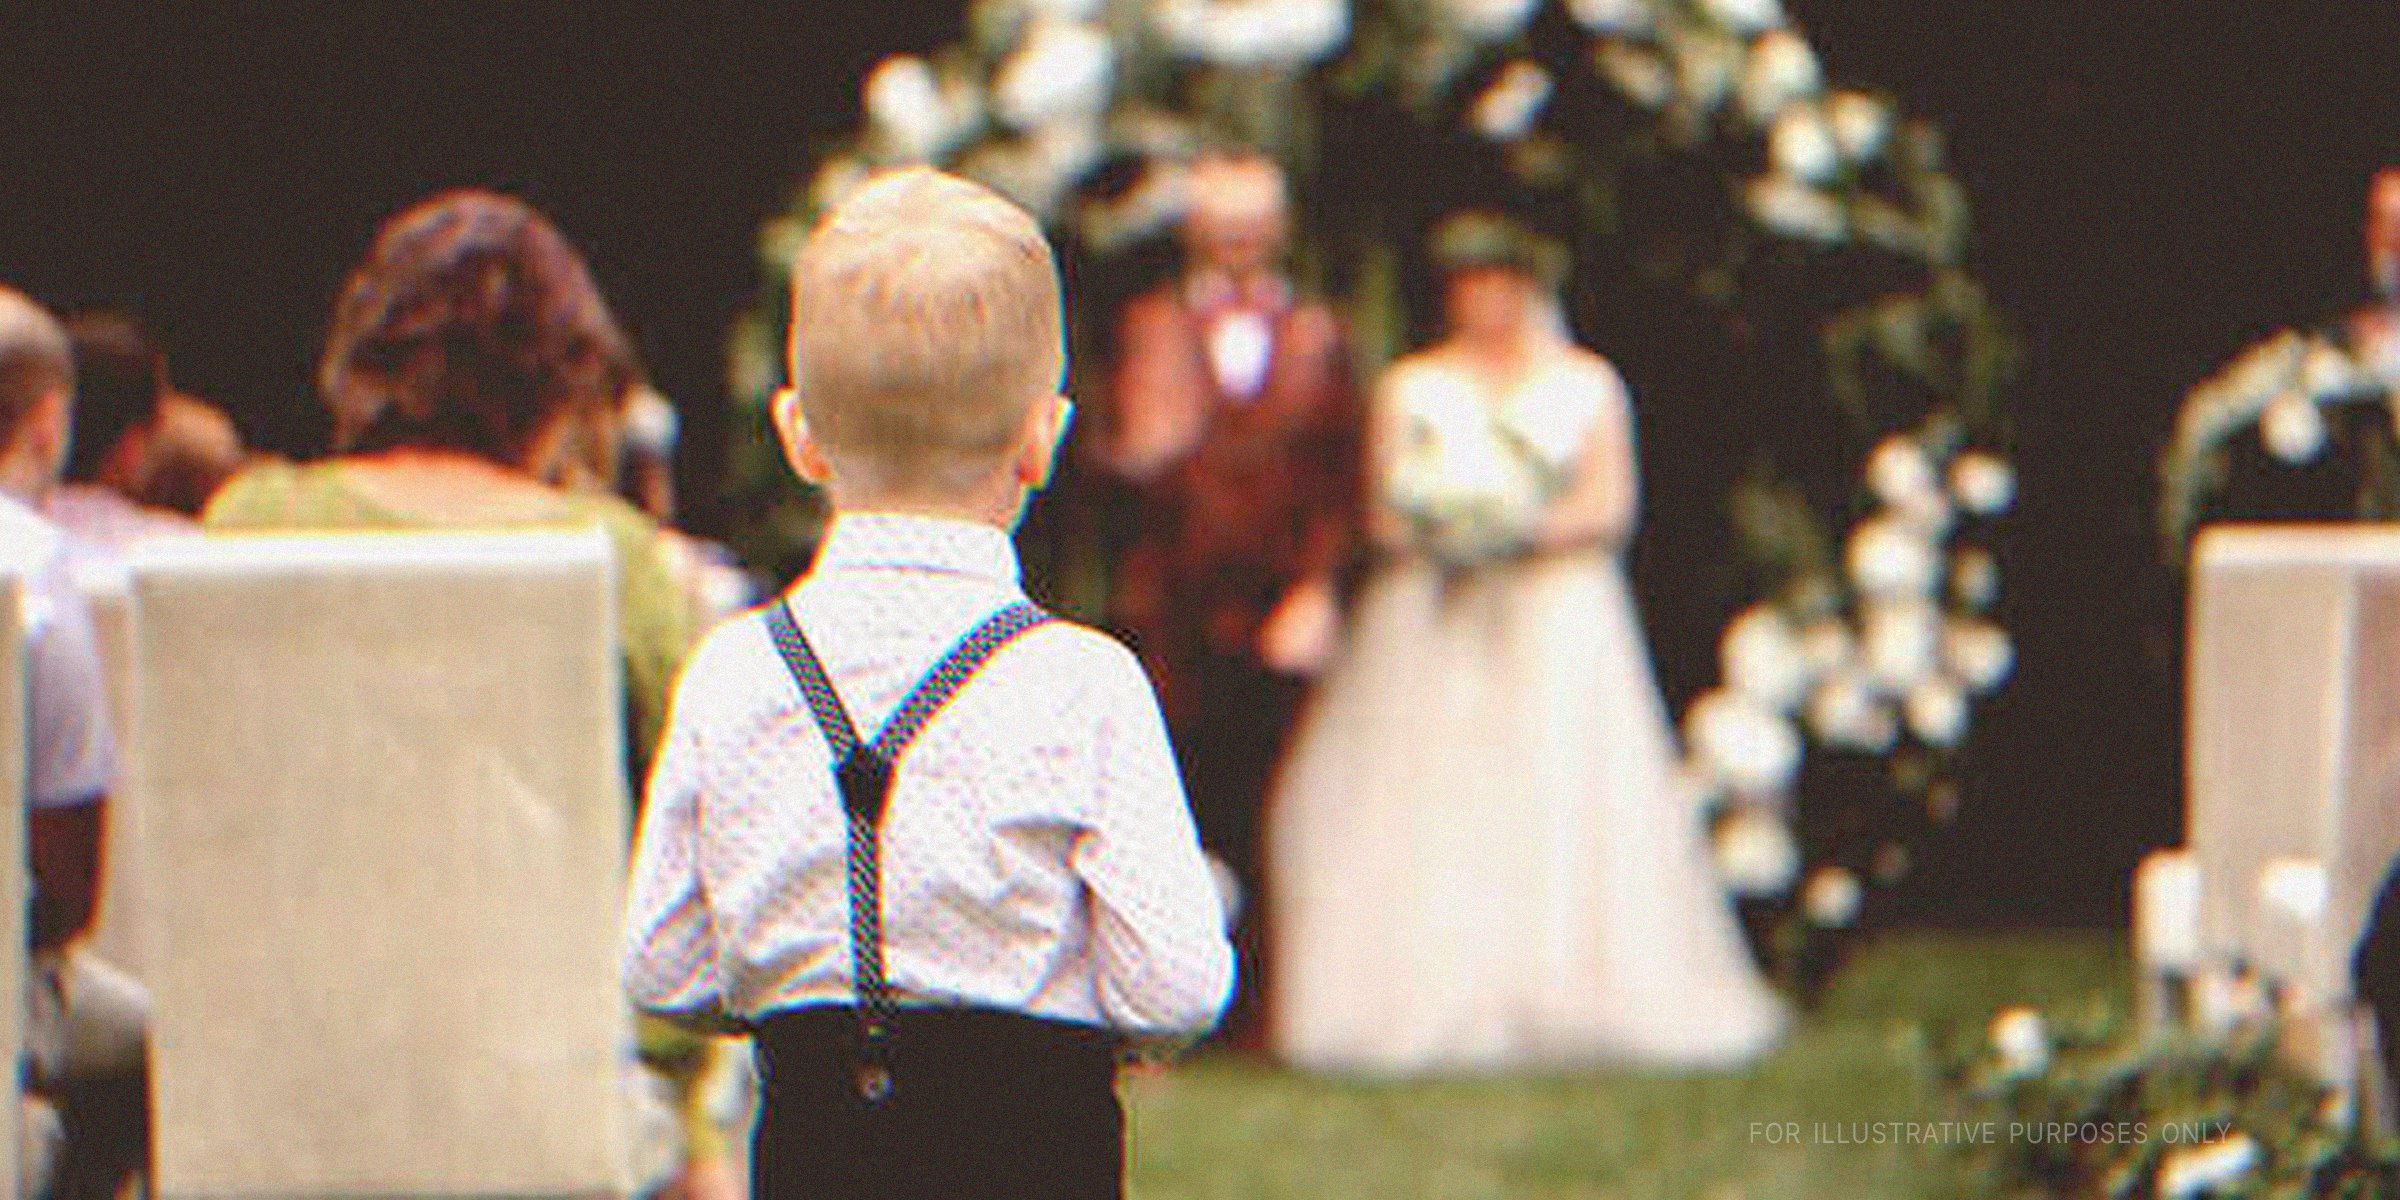 A young boy walking down the aisle | Source: Shutterstock